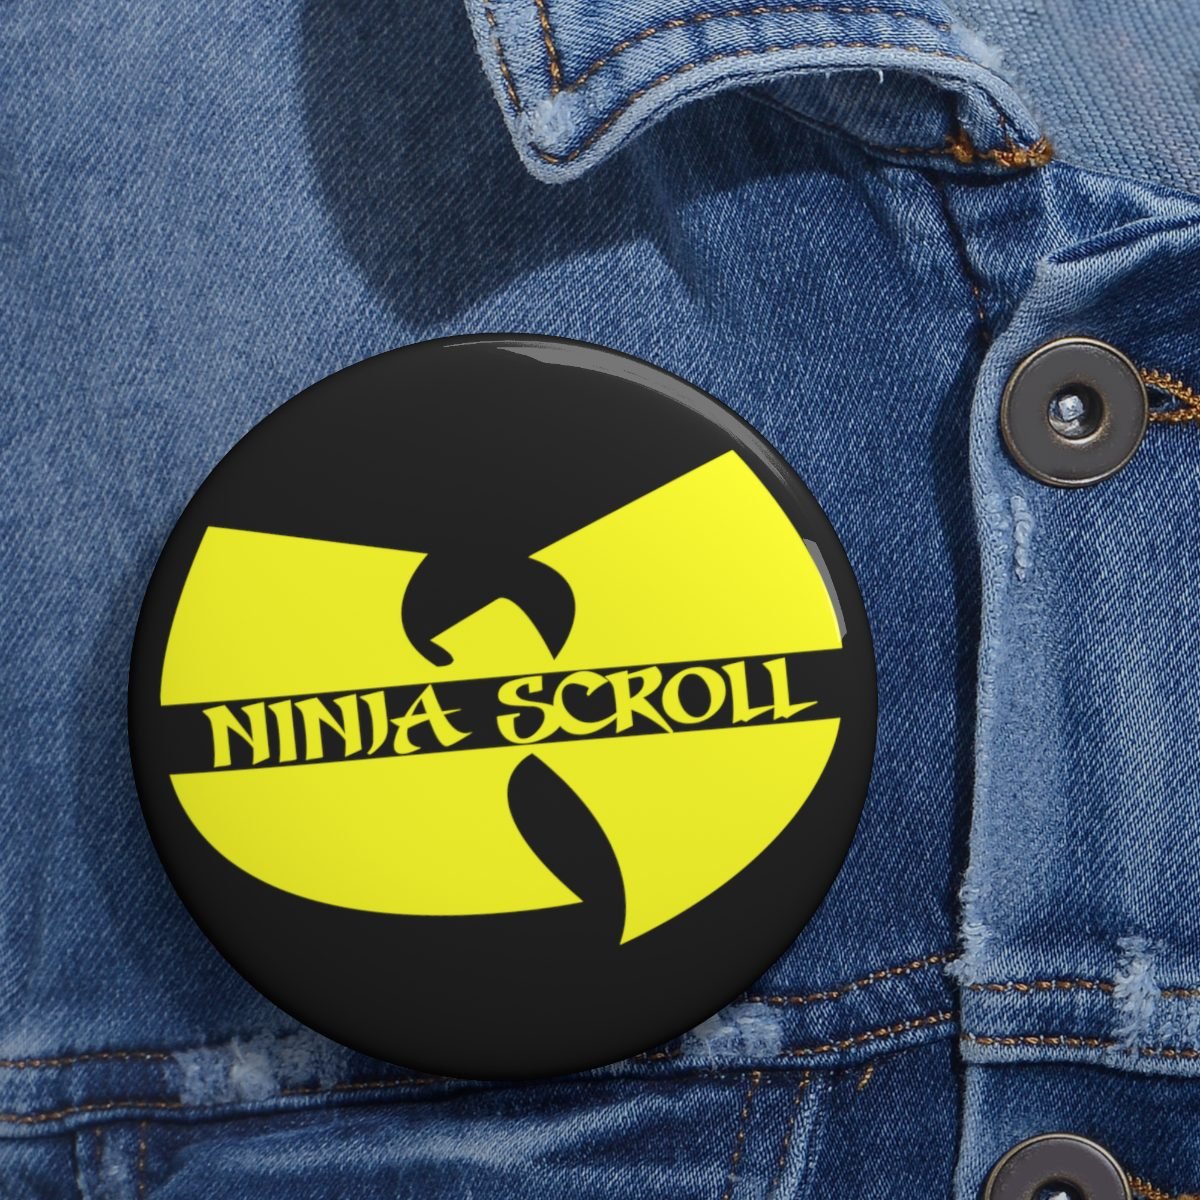 Ninja Scroll – Dove Pin Buttons